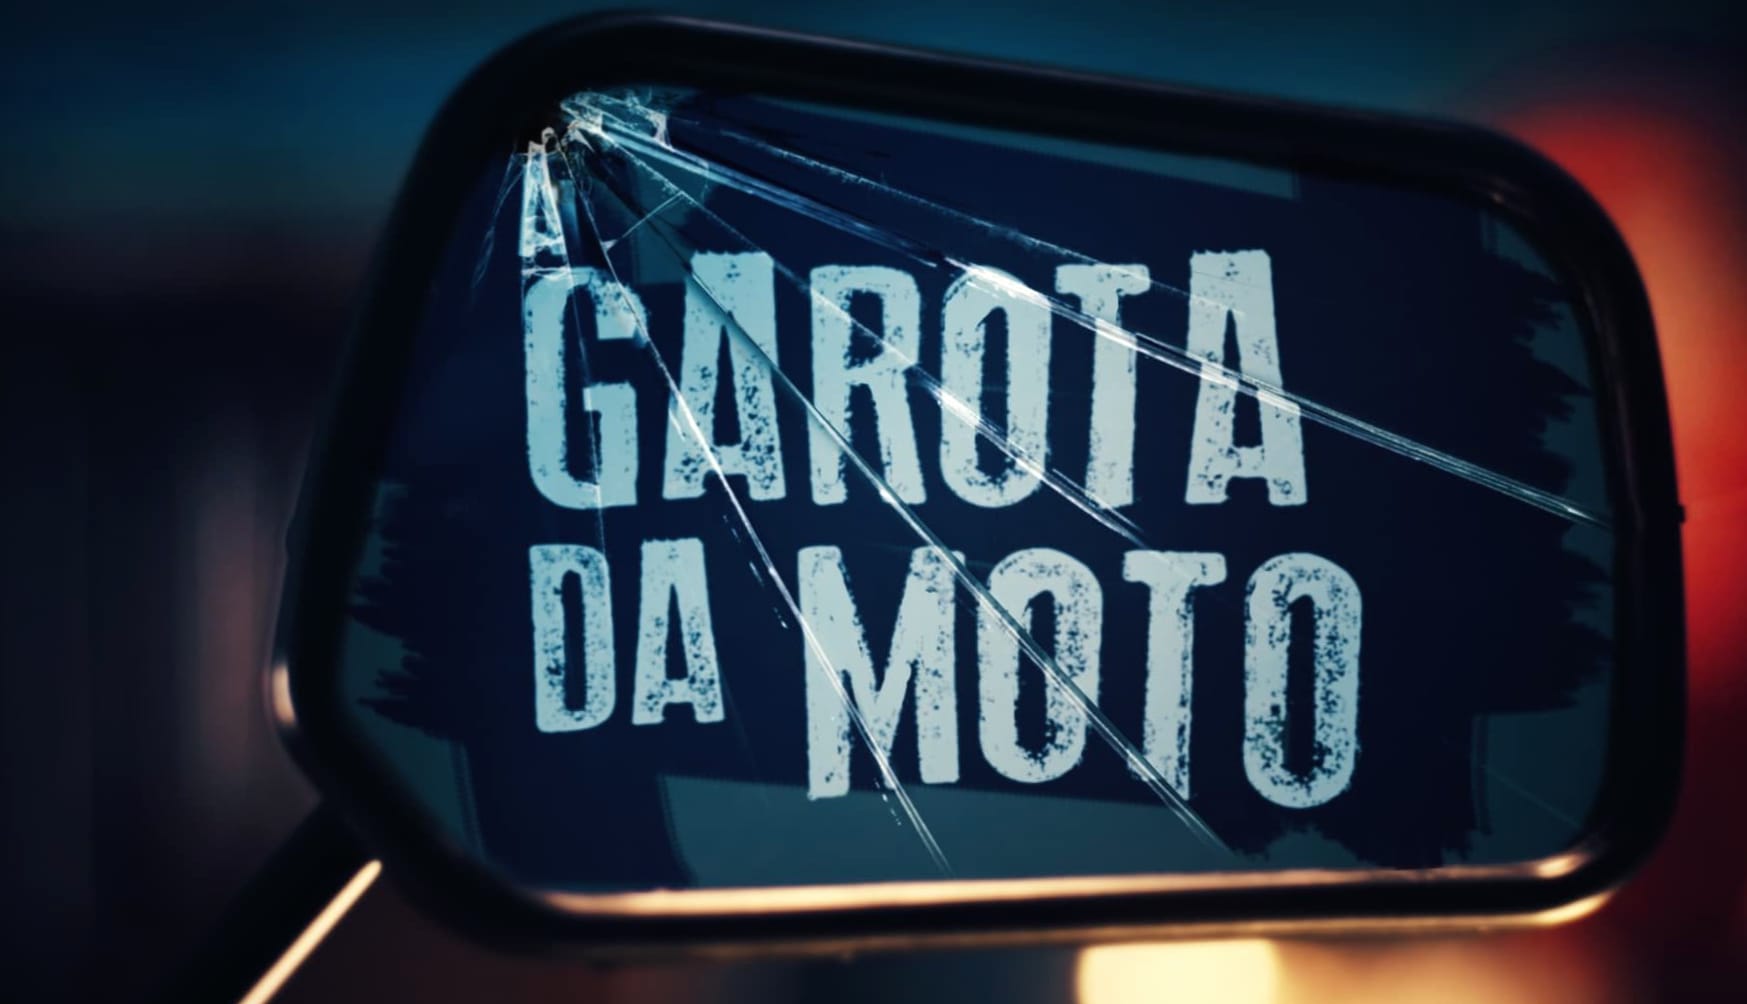 A Garota da Moto at 640 x 1136 iPhone 5 size wallpapers HD quality